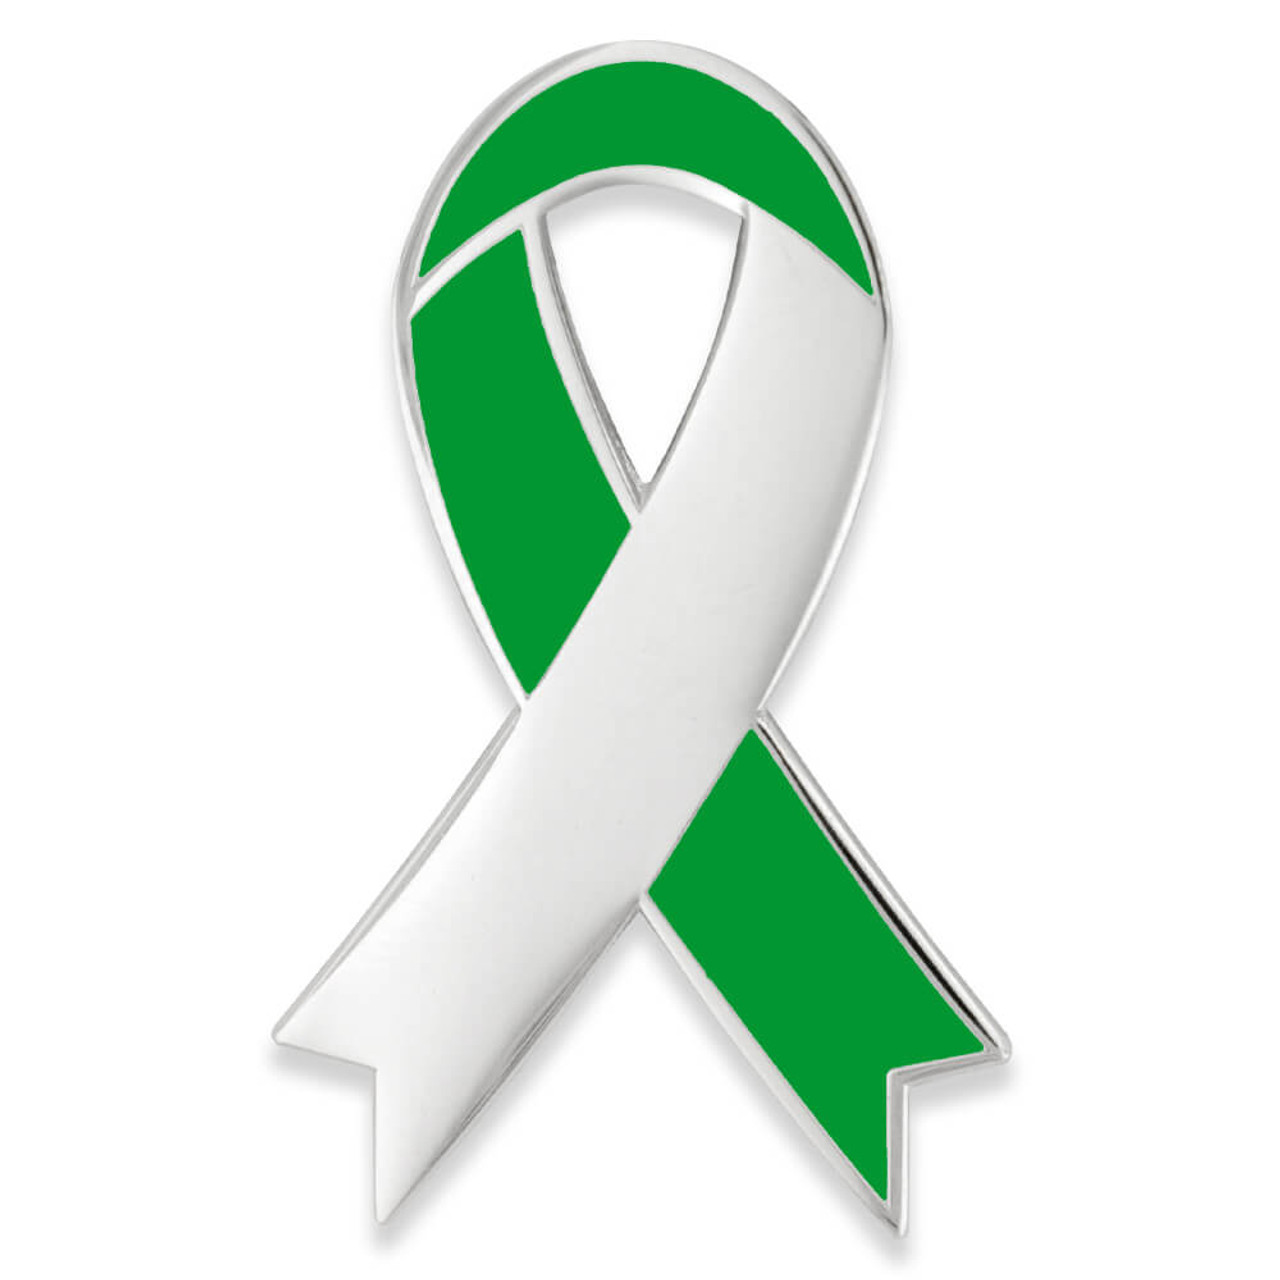 Blue and Green Awareness Ribbons | Lapel Pins